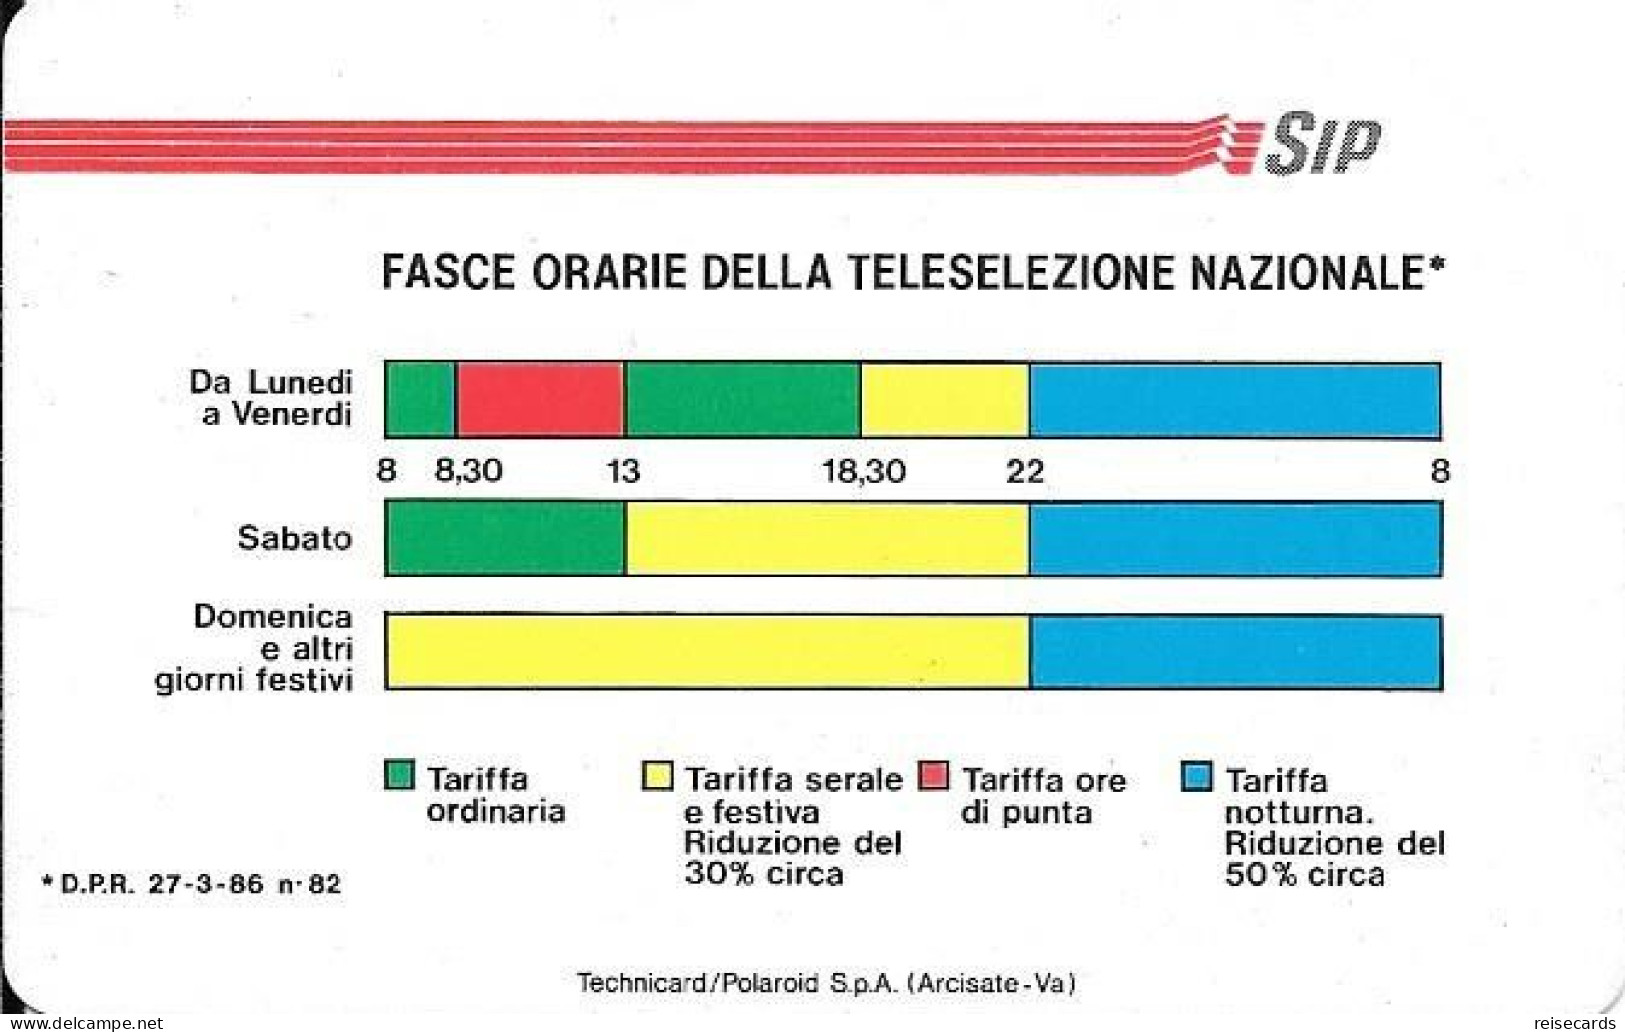 Italy: Telecom Italia SIP - Fasce Orarie Della Teleselezione Nazionale. Watermarks - Públicas  Publicitarias